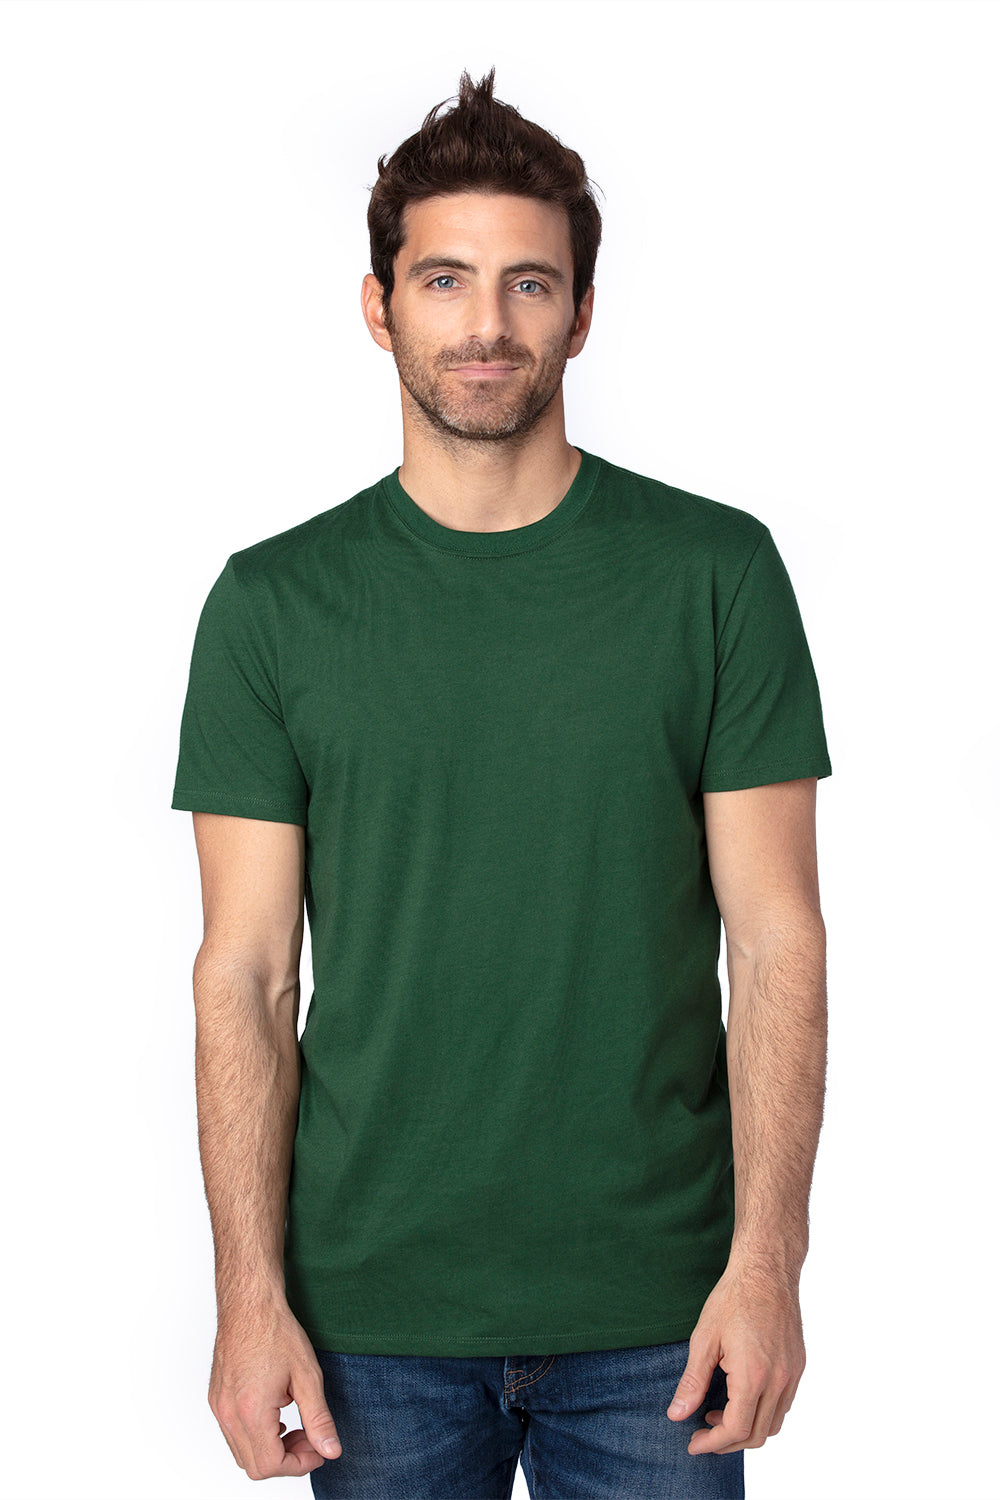 Threadfast Apparel 100A Mens Ultimate Short Sleeve Crewneck T-Shirt Forest Green Front